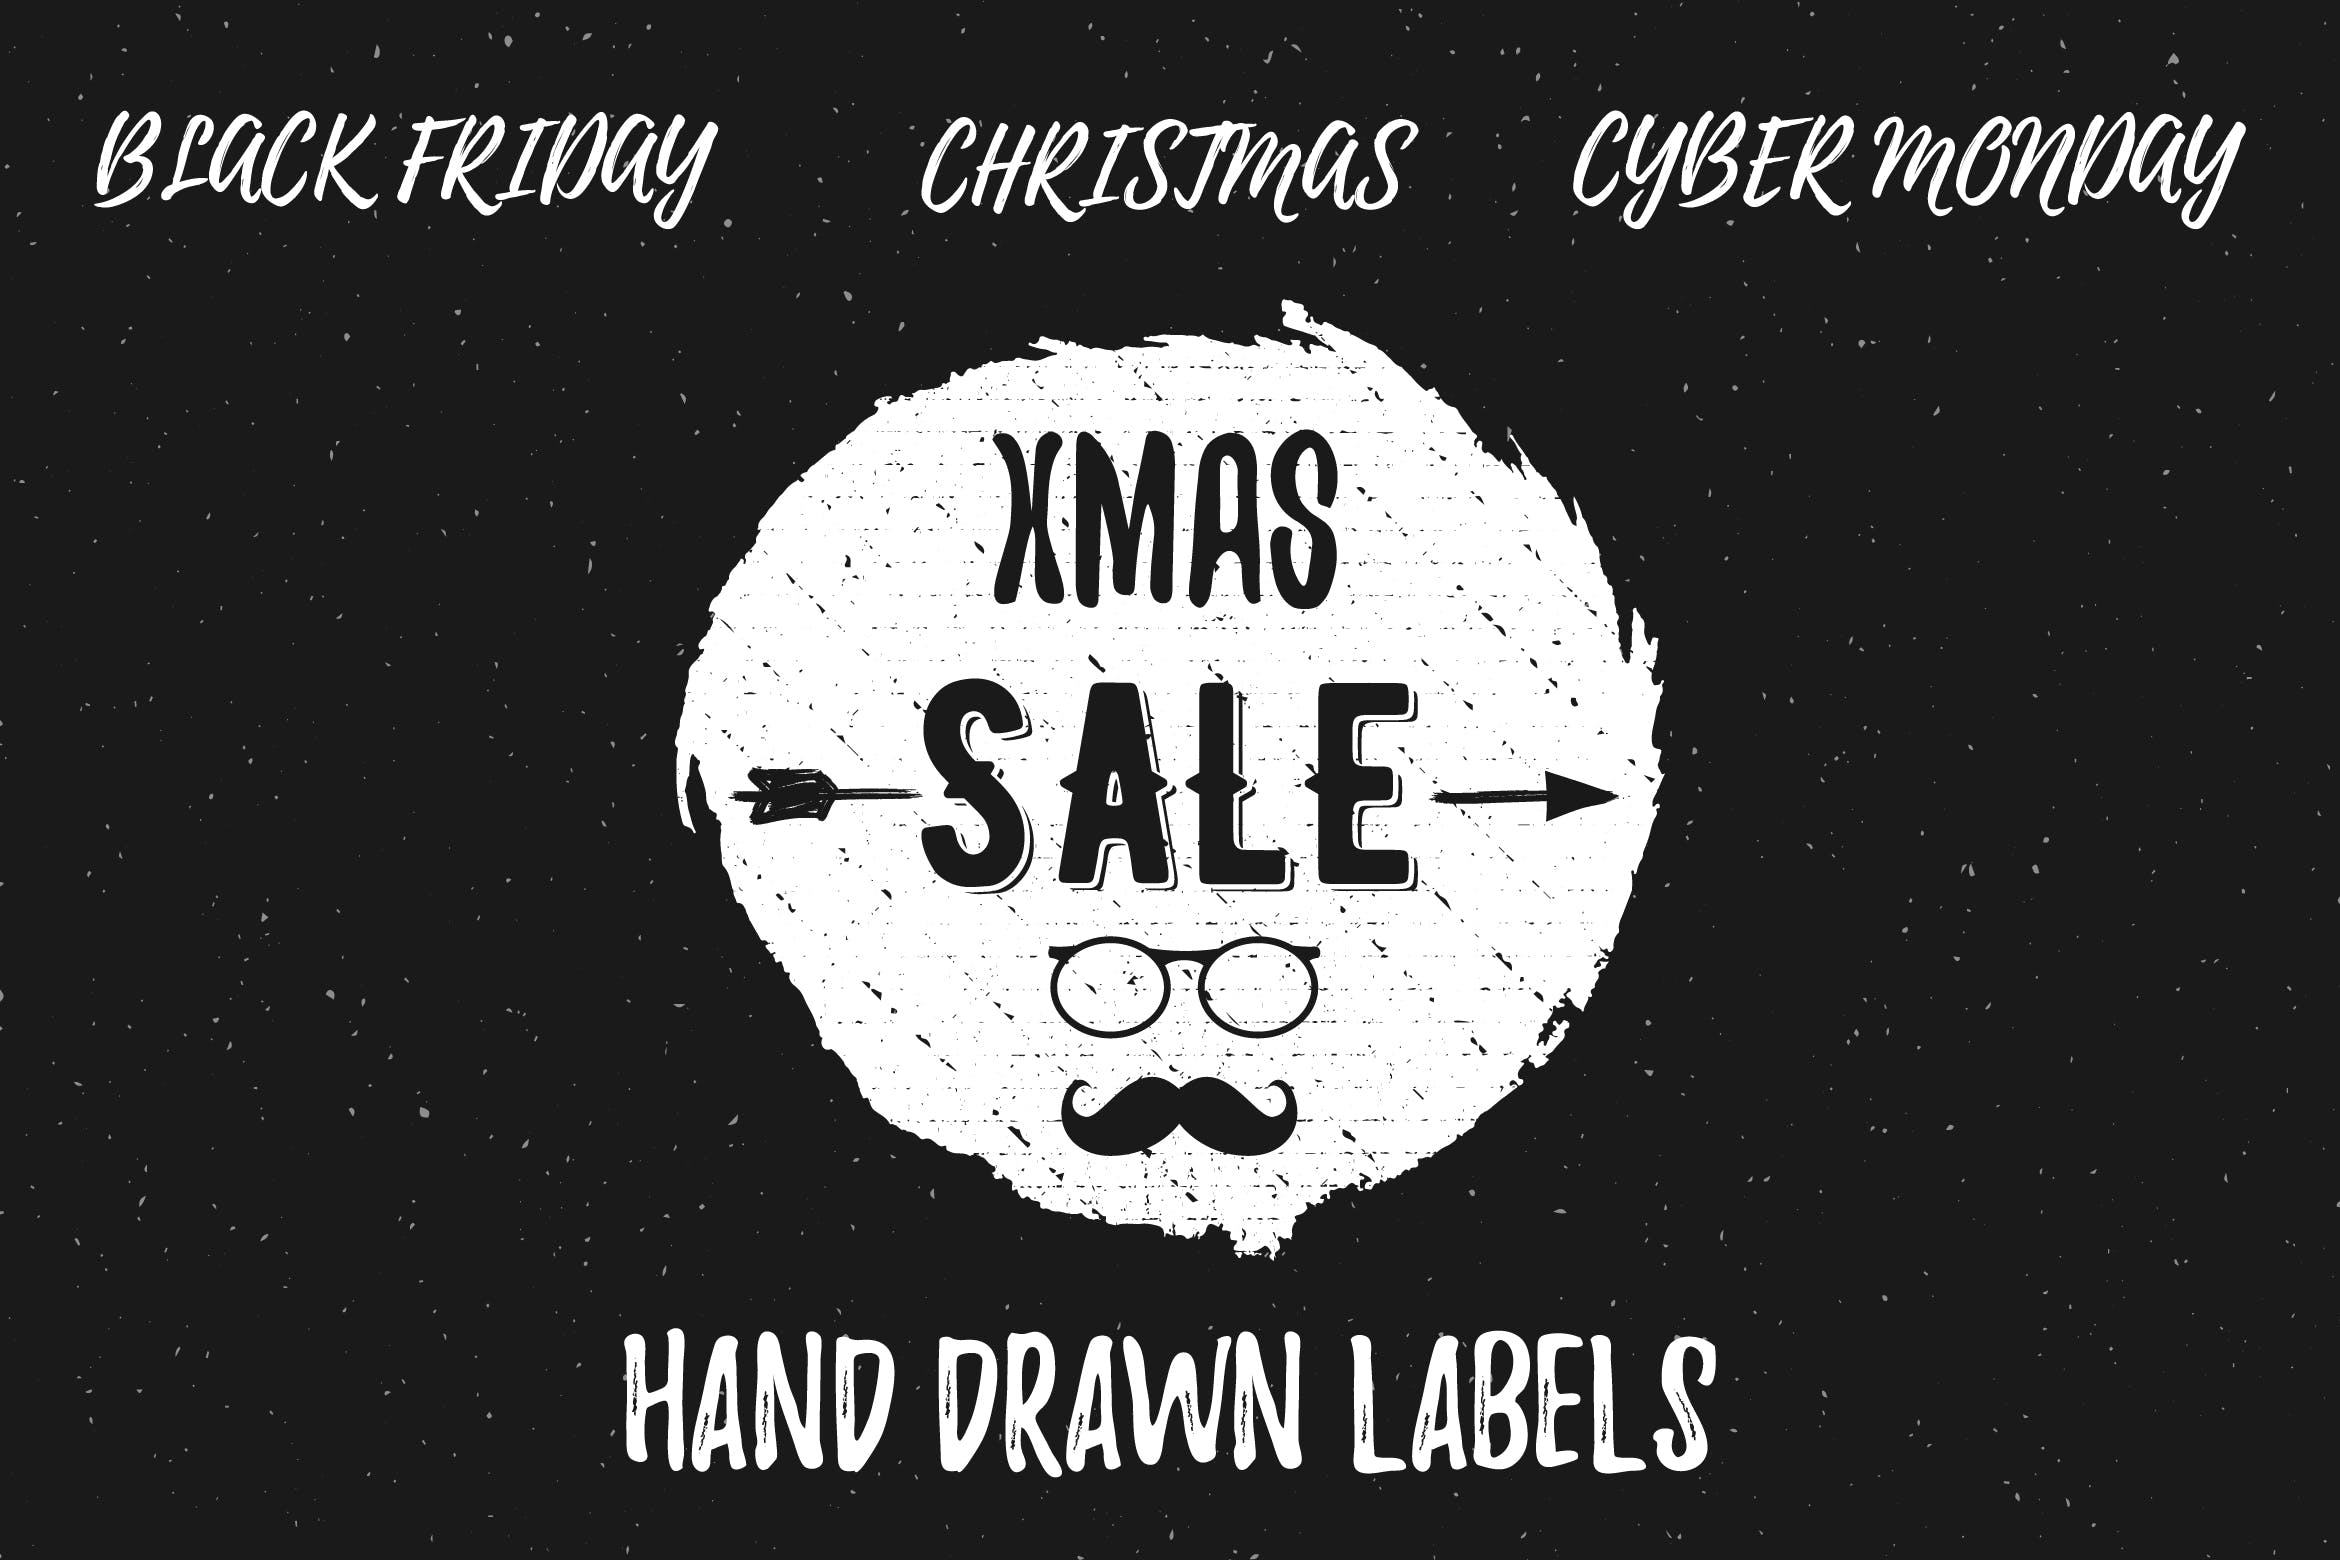 手绘设计风格圣诞节促销标签/Logo设计模板 Hand Drawn Christmas Sale Labels / Logos插图